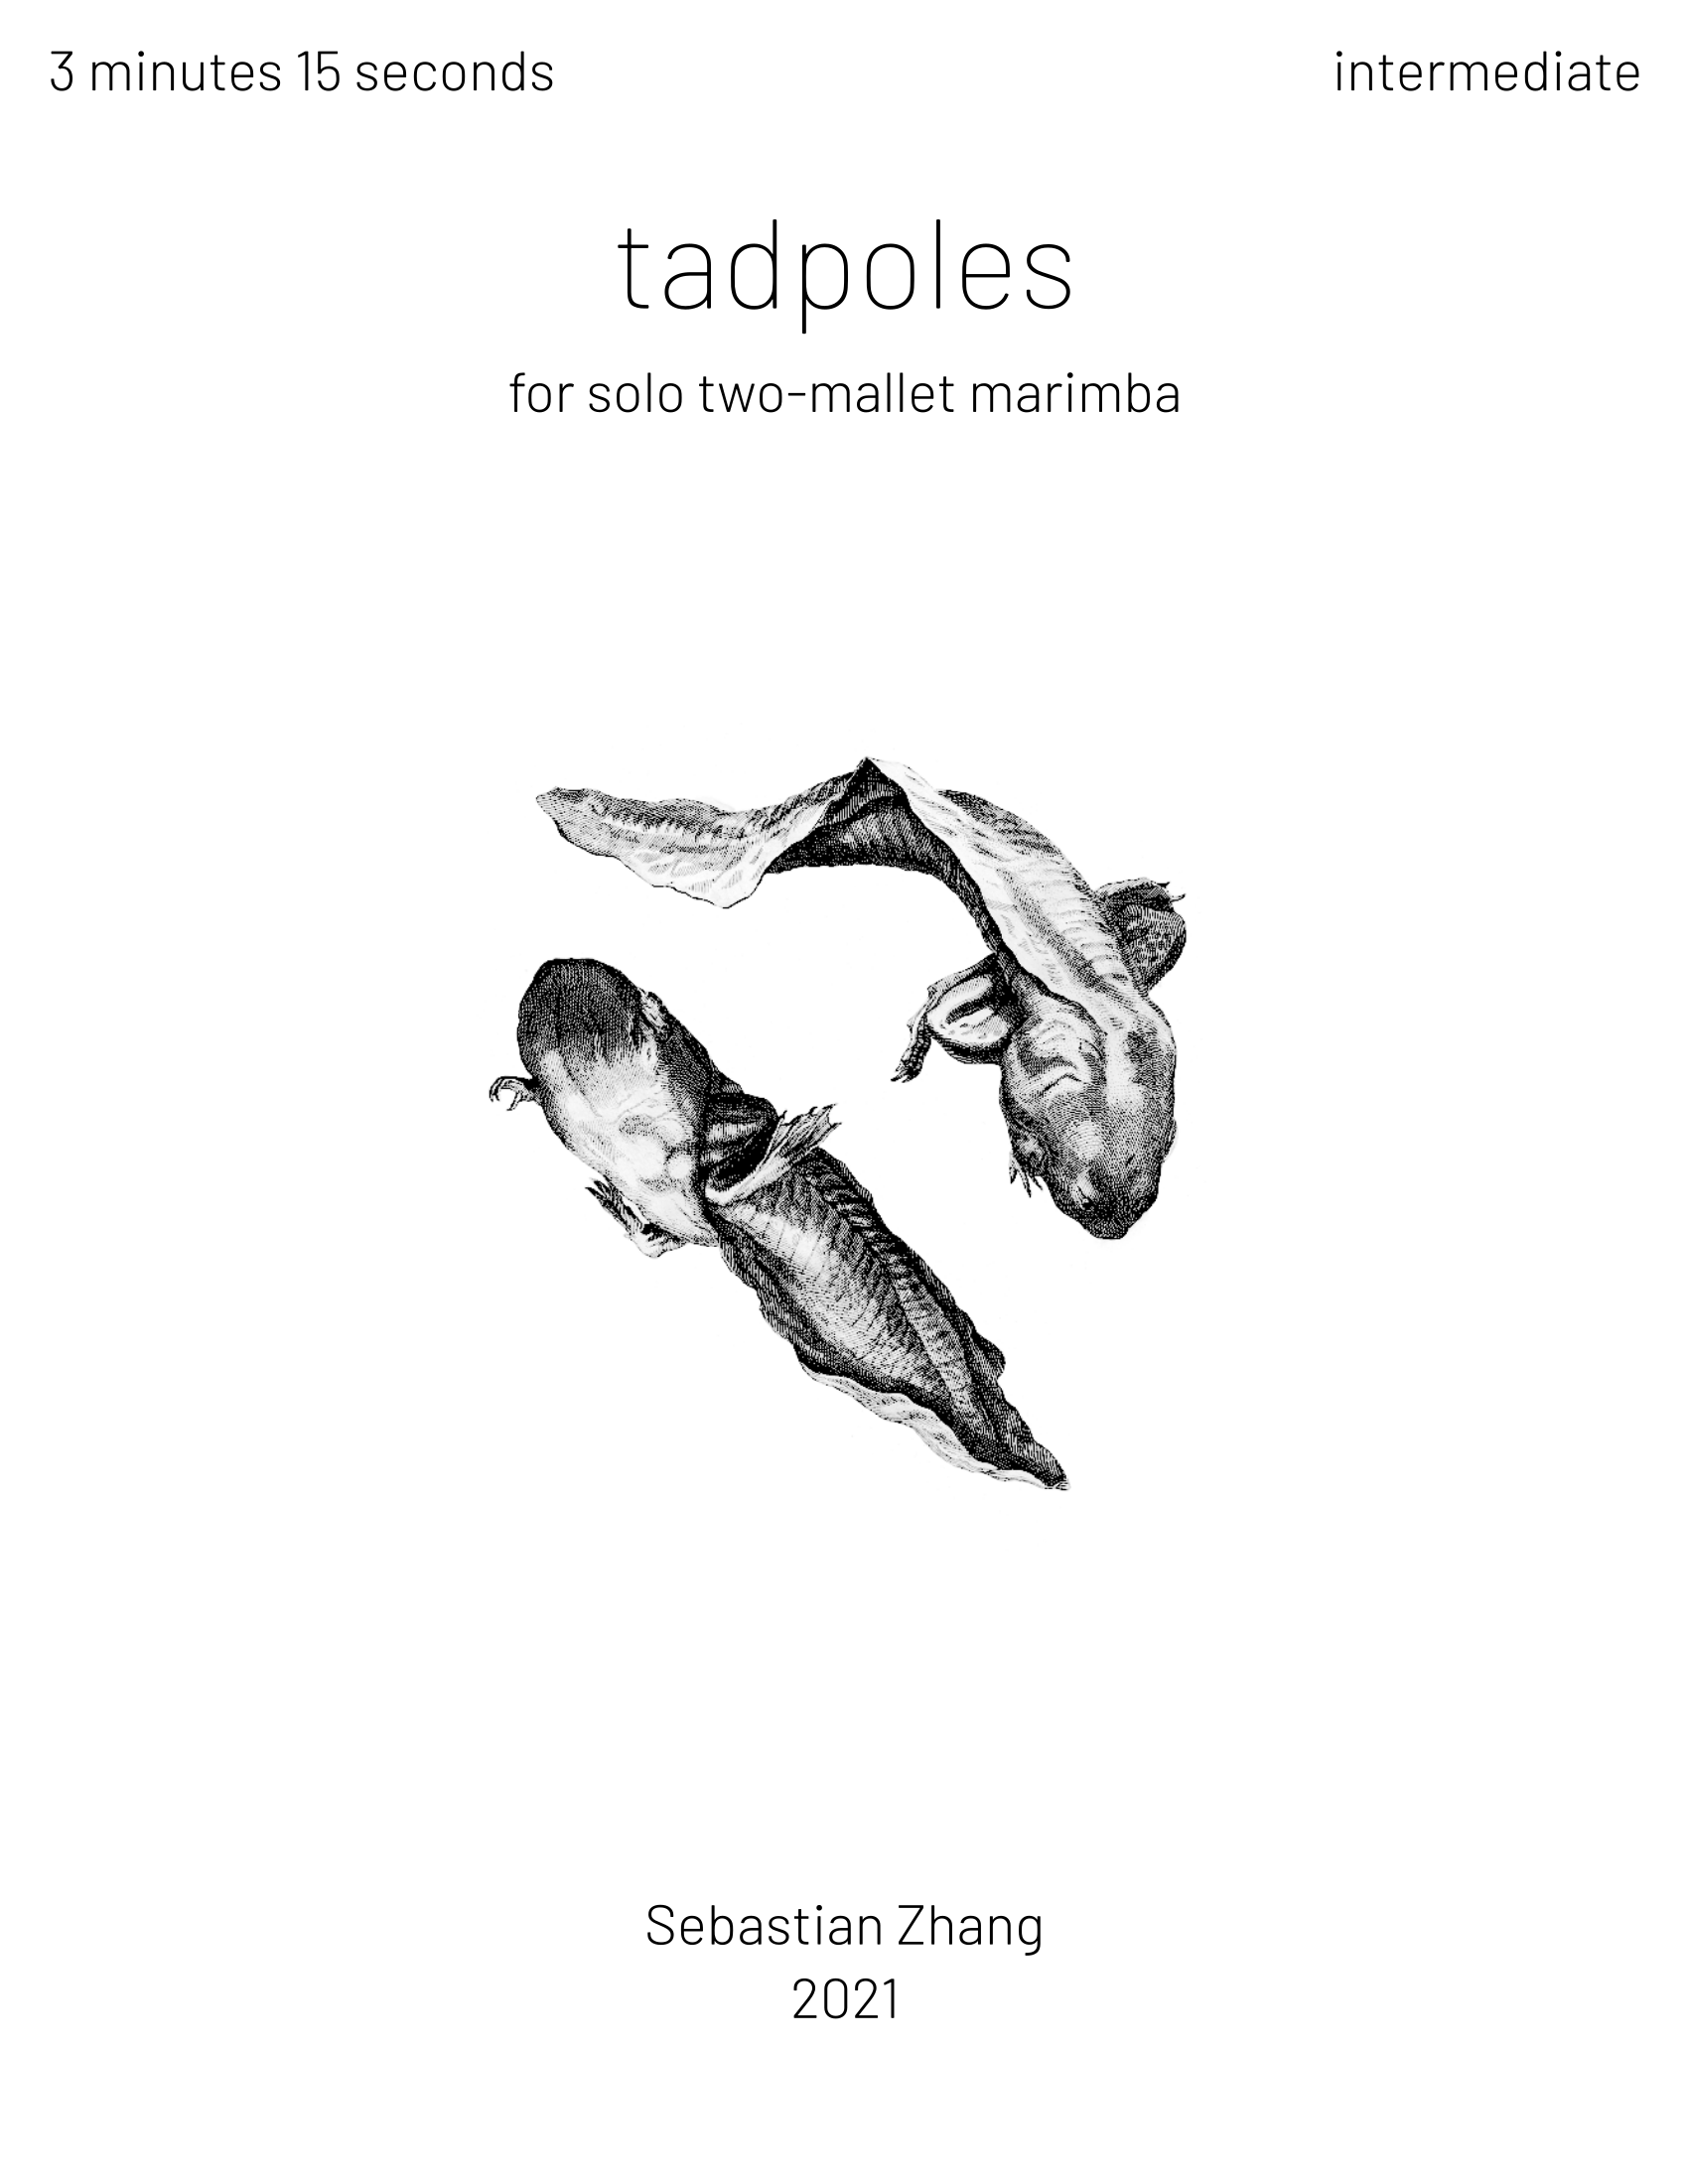 tadpoles Cover